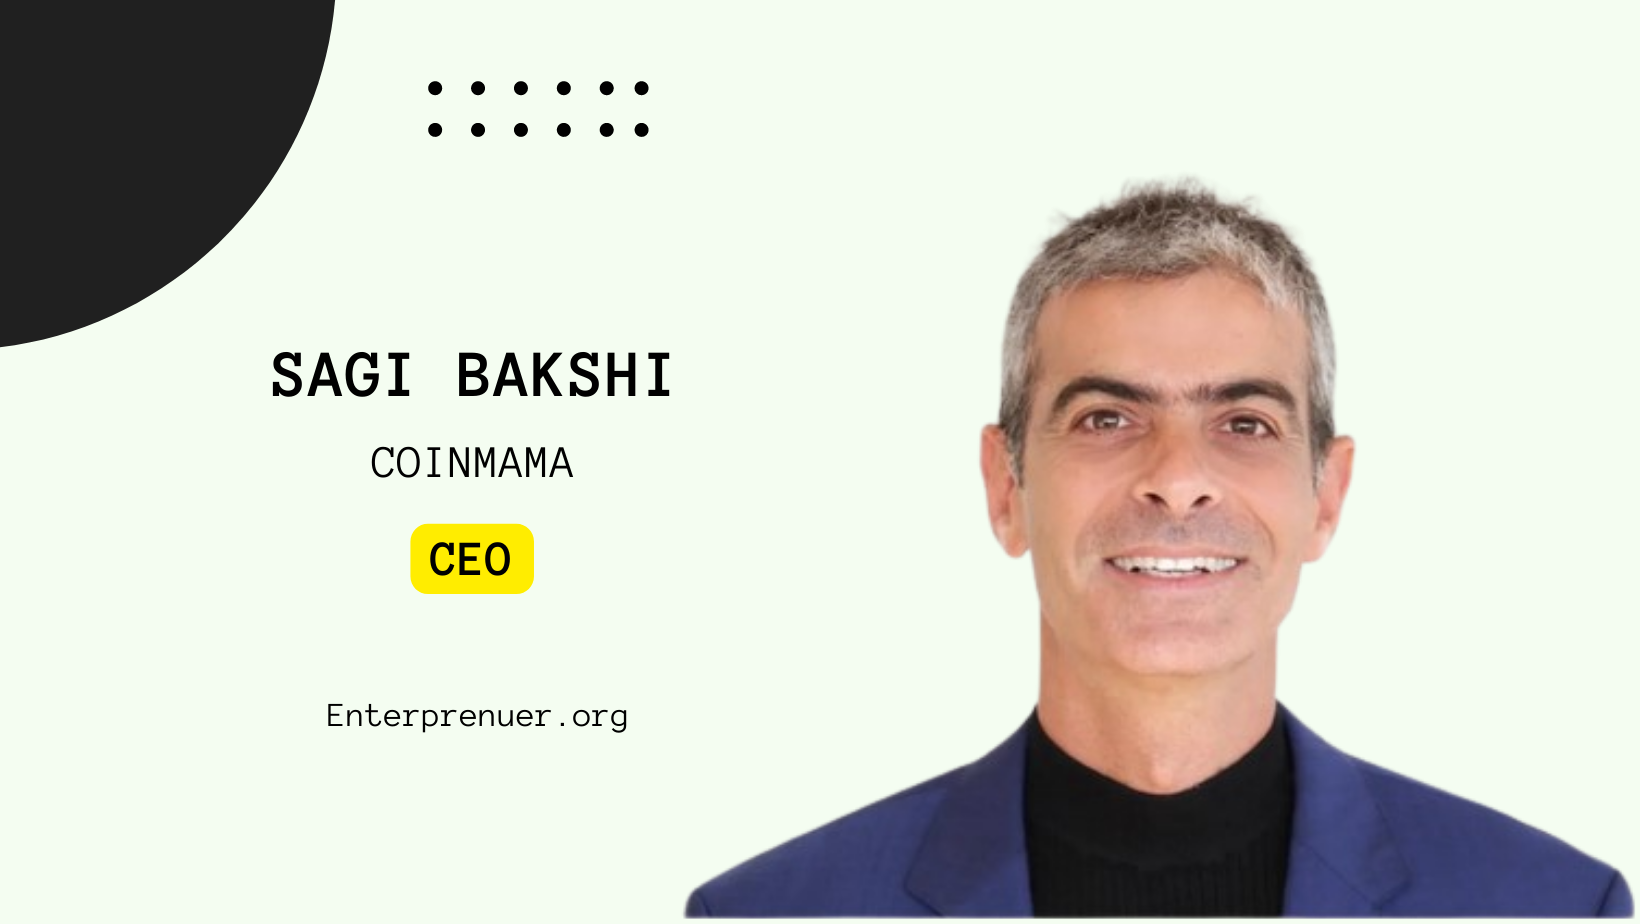 Sagi Bakshi, CEO of Coinmama